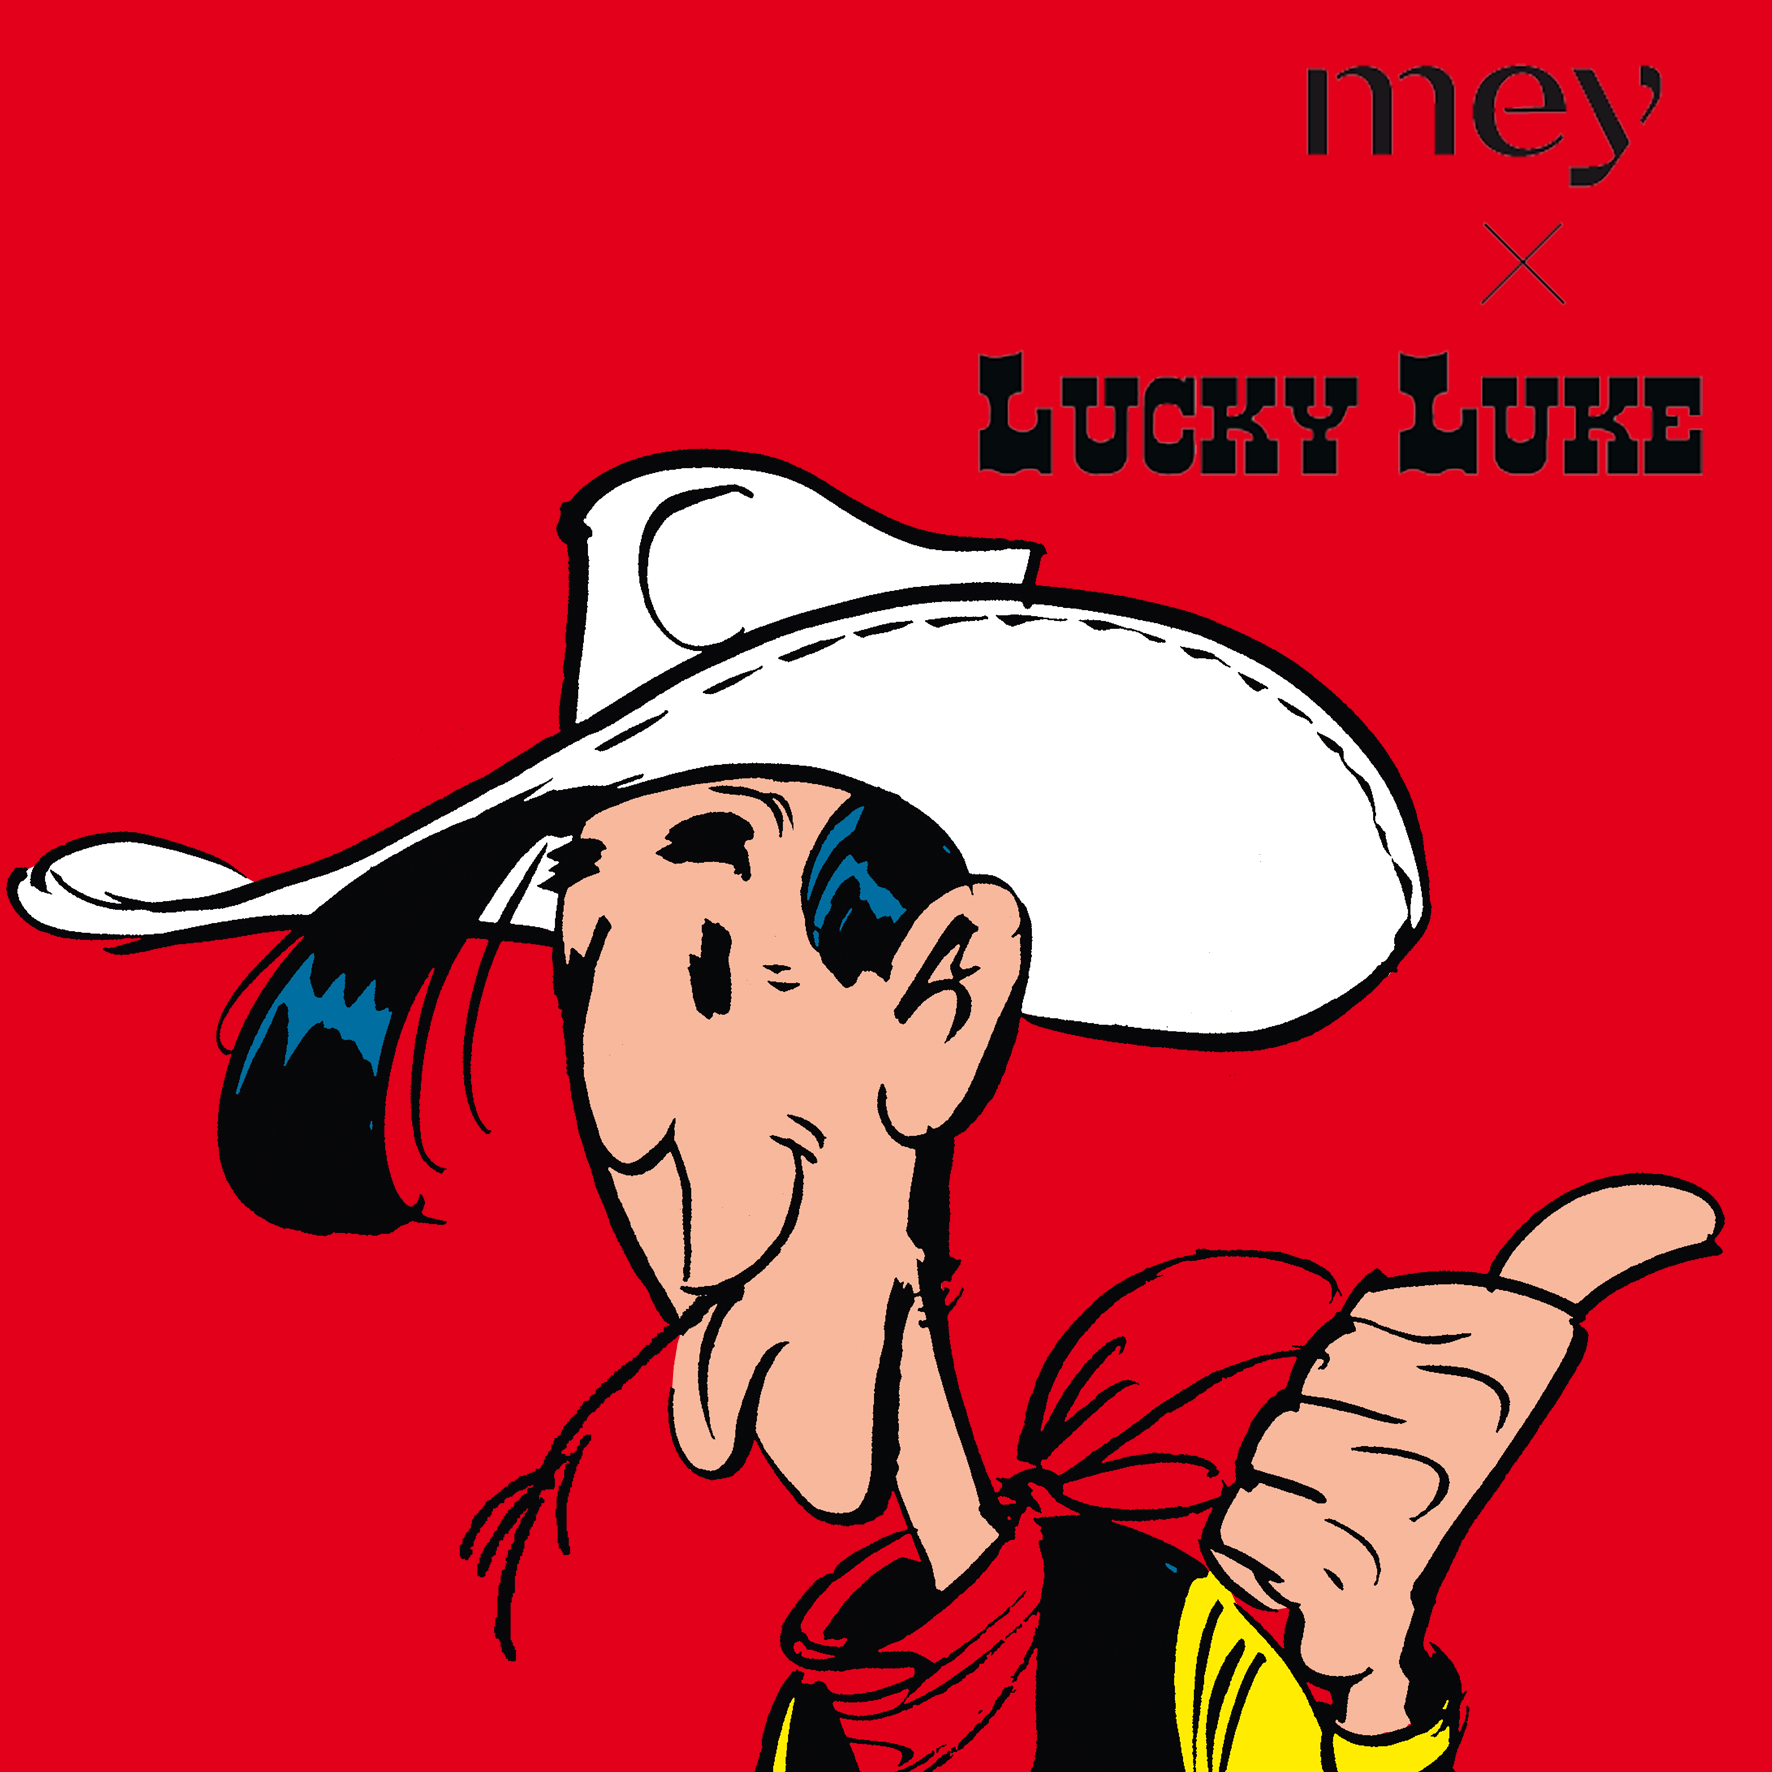 Darin schlafen echte Cowboys – Lucky Luke  x mey